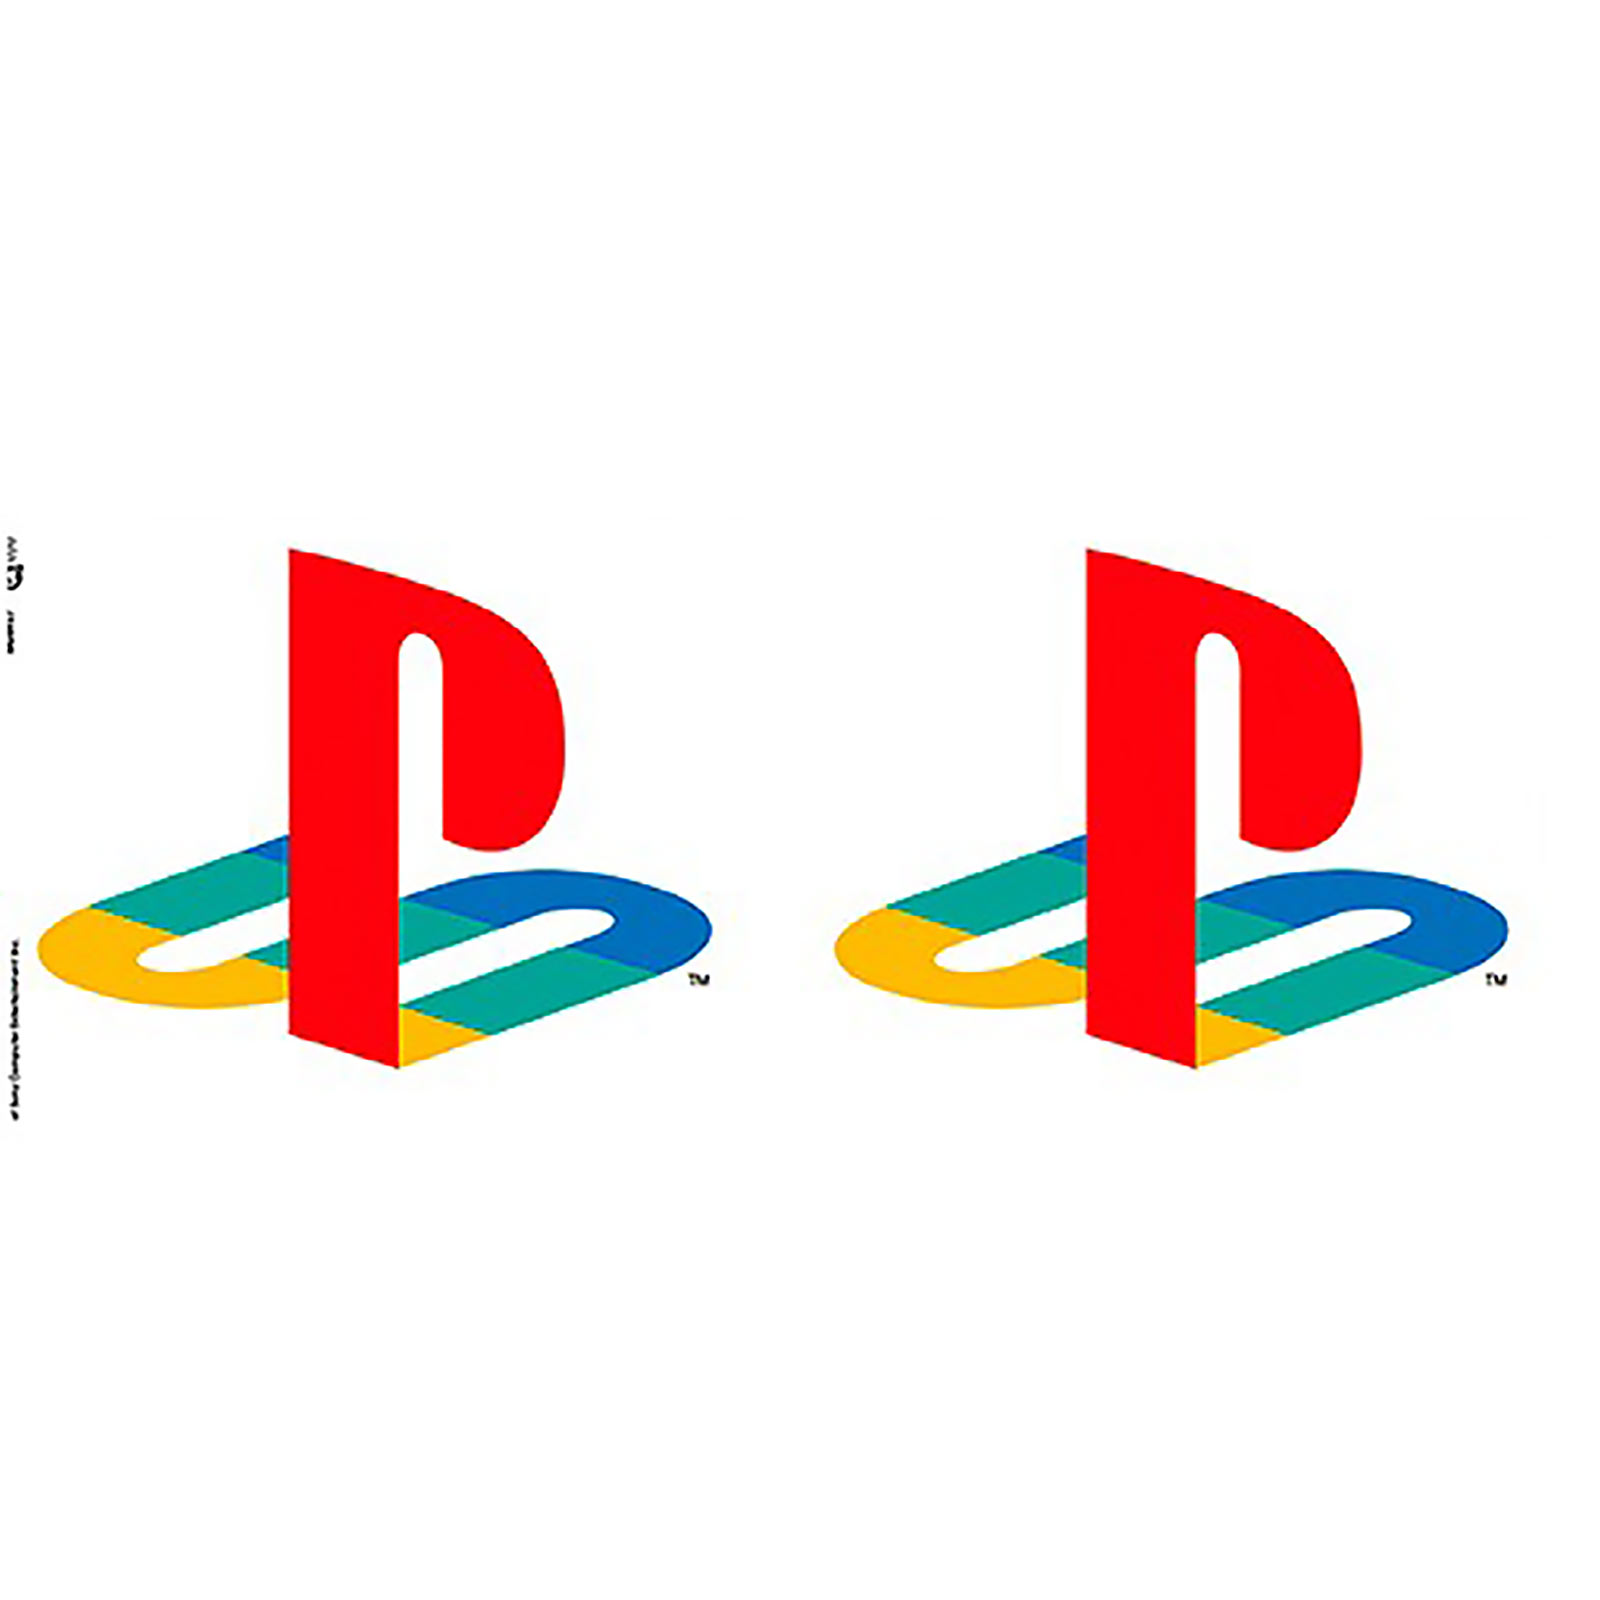 PlayStation - Logo Tasse